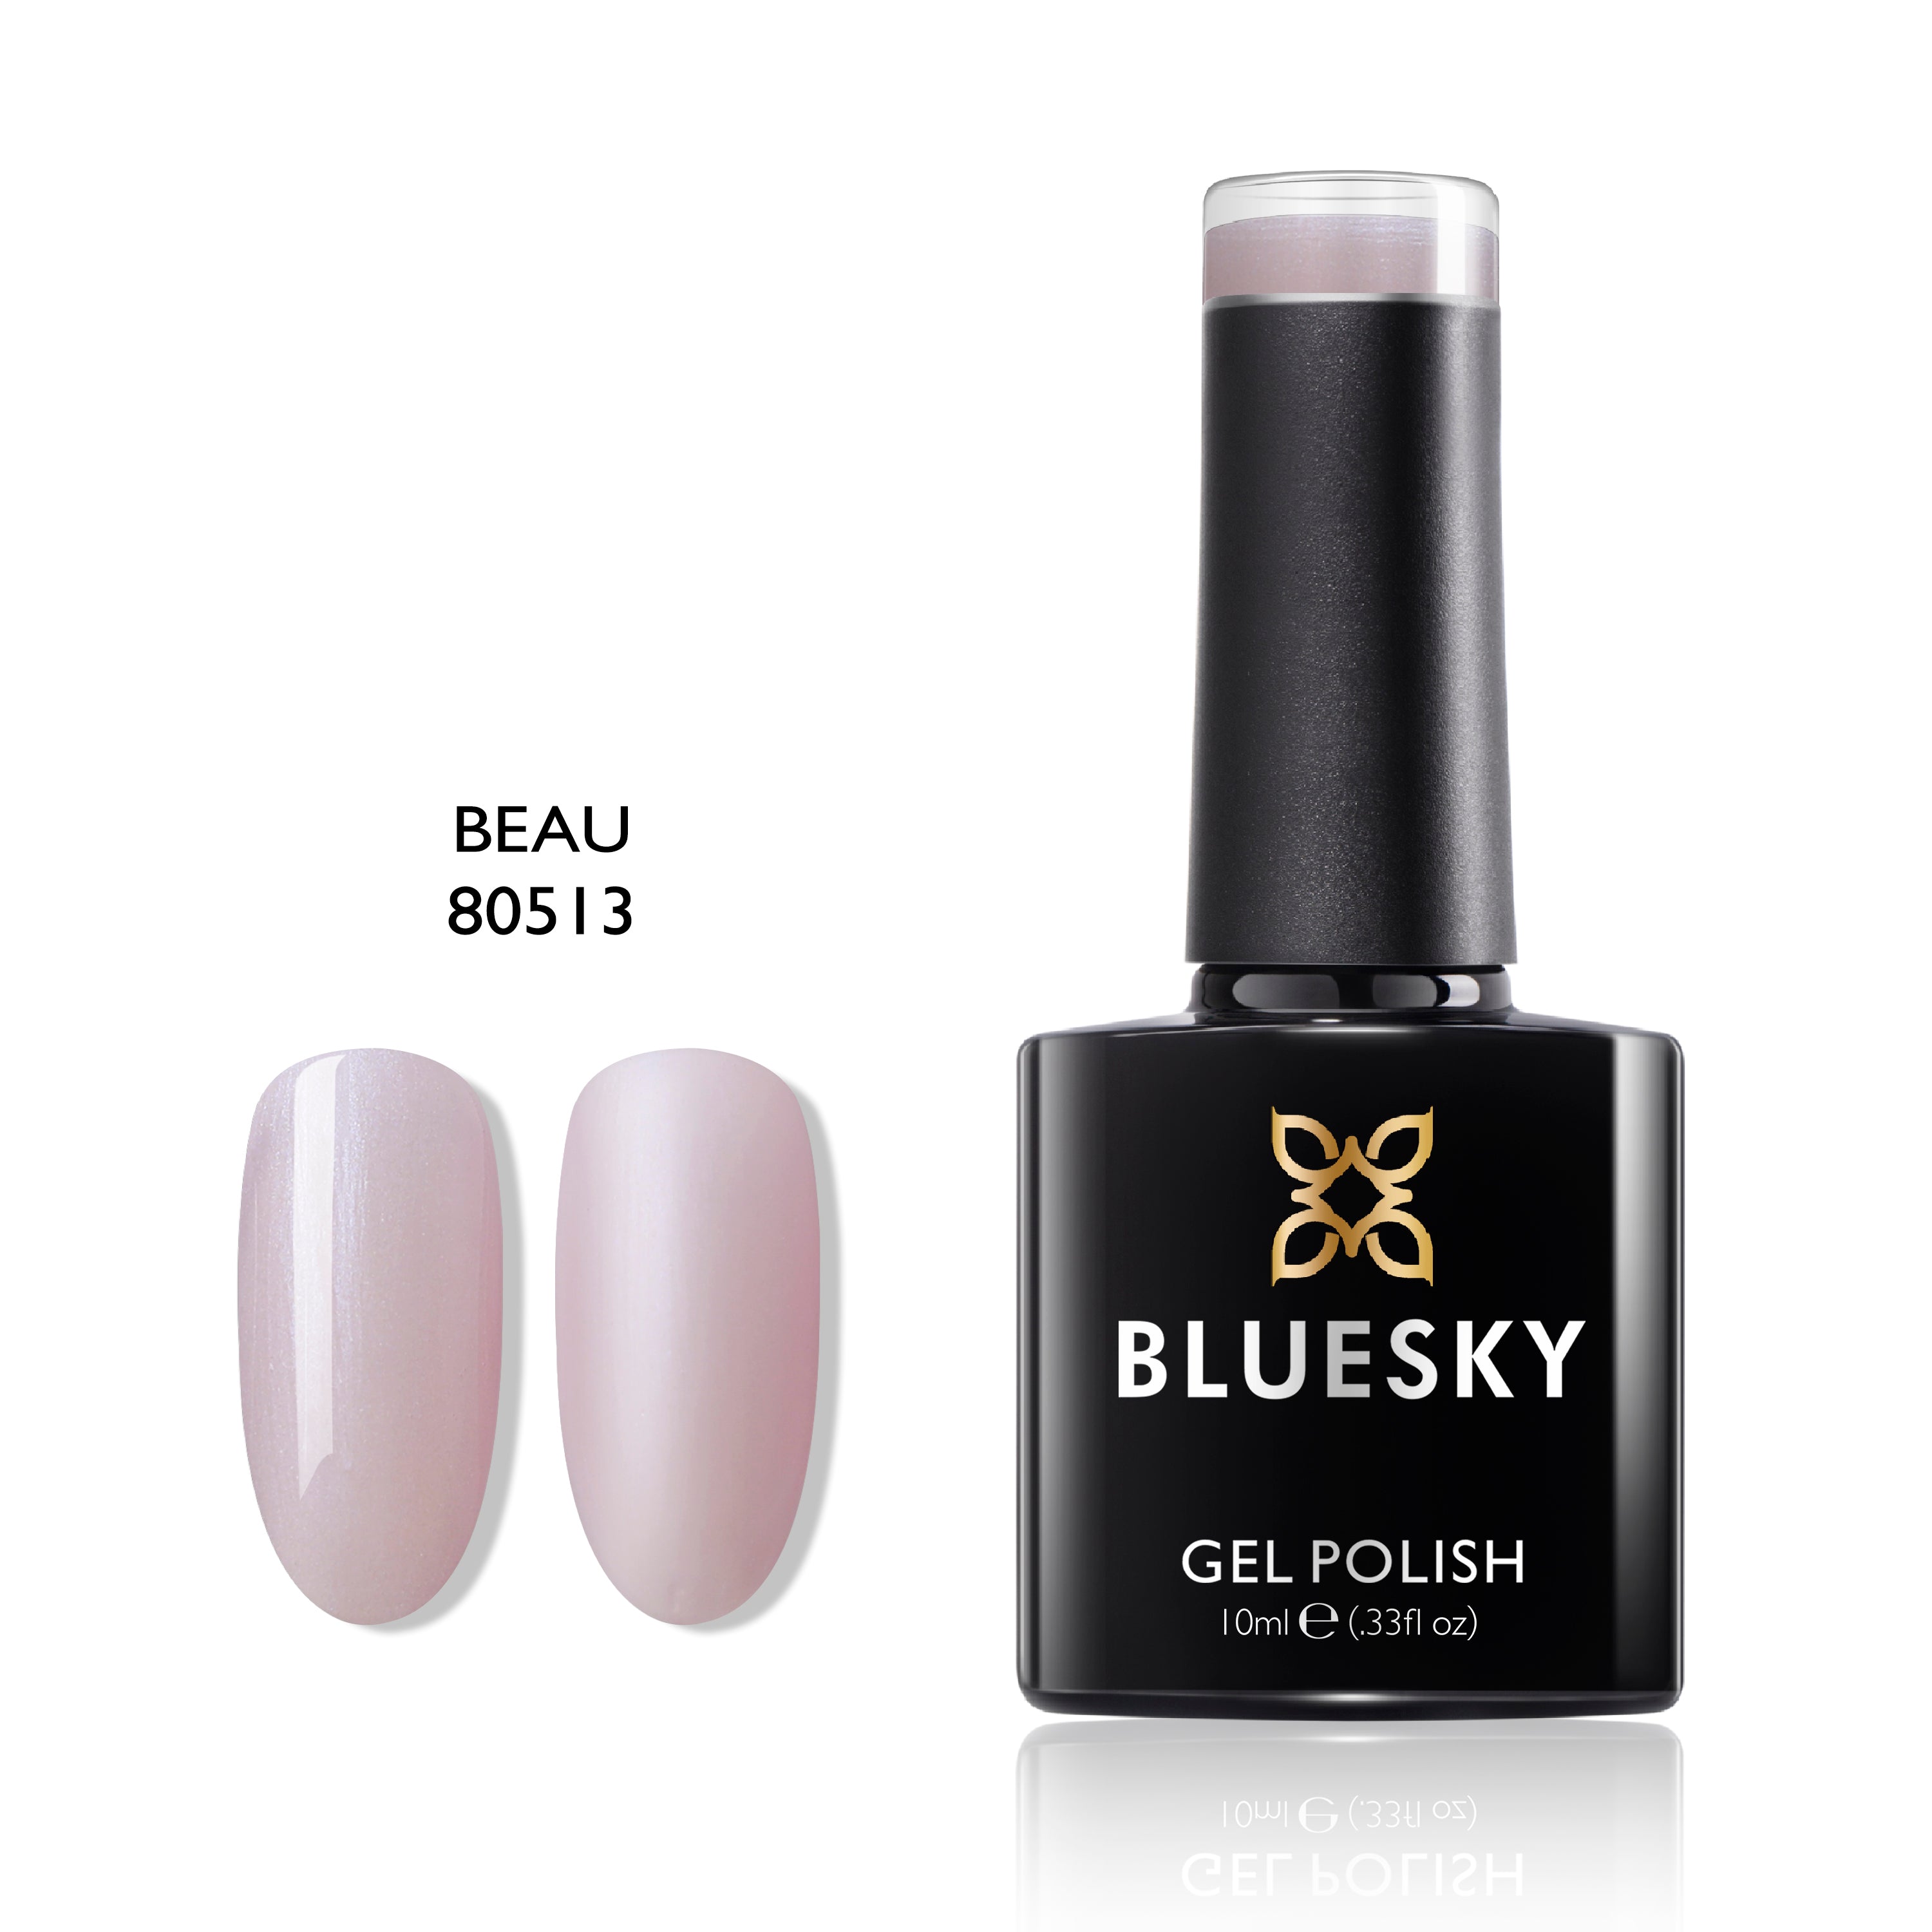 Beau | Pearly Shimmer Color | 10ml Gel Polish - BLUESKY